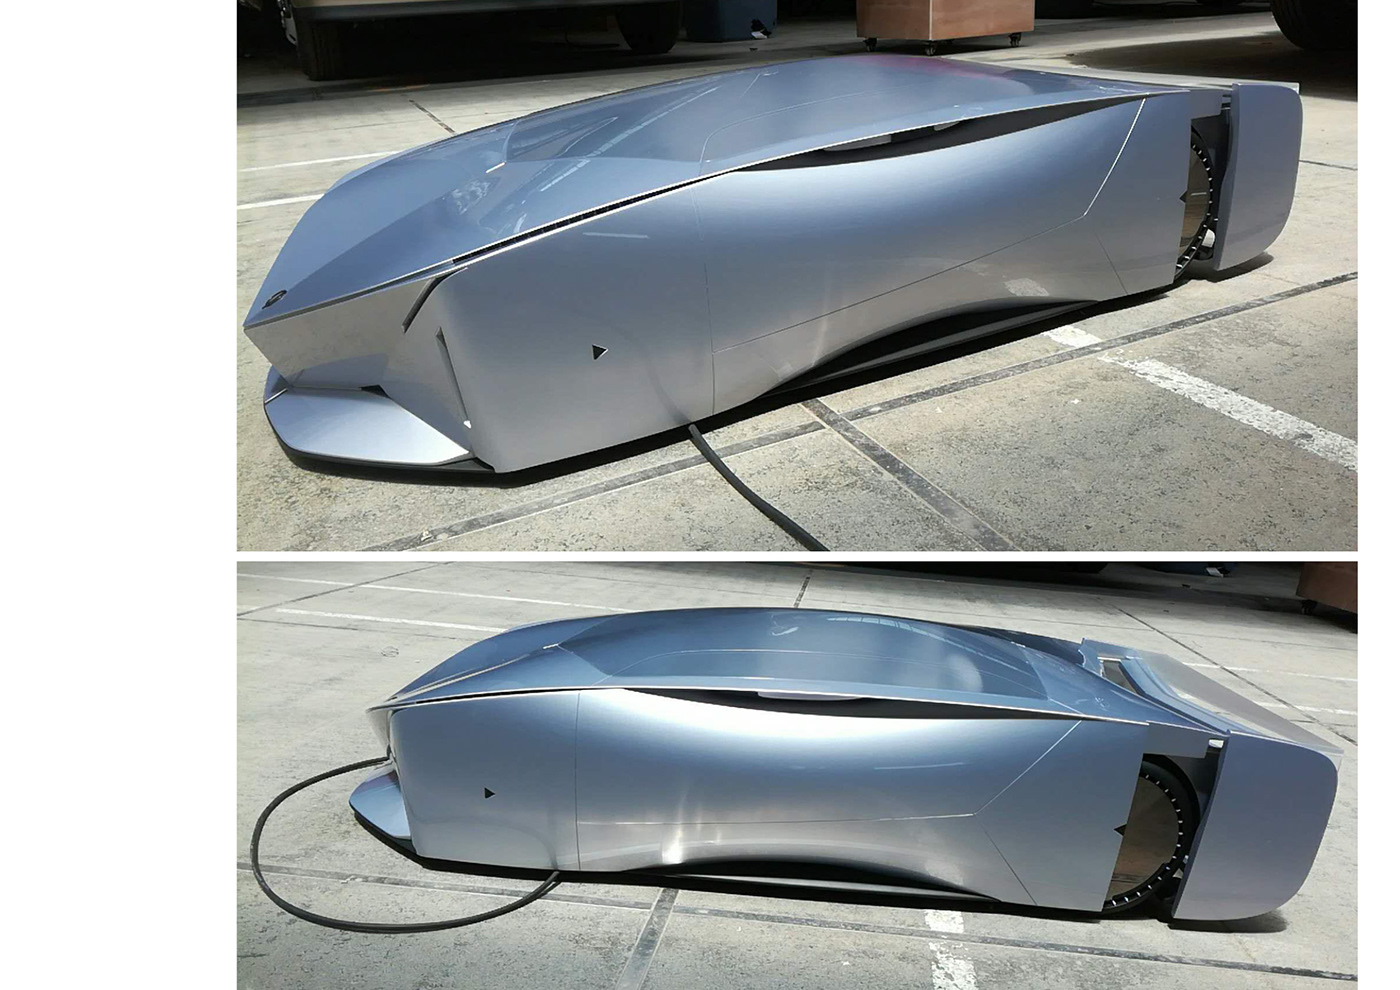 Vehicle Design car design Transportation Design futuristic design Minimalism simplicity vision graphic design  sculptural